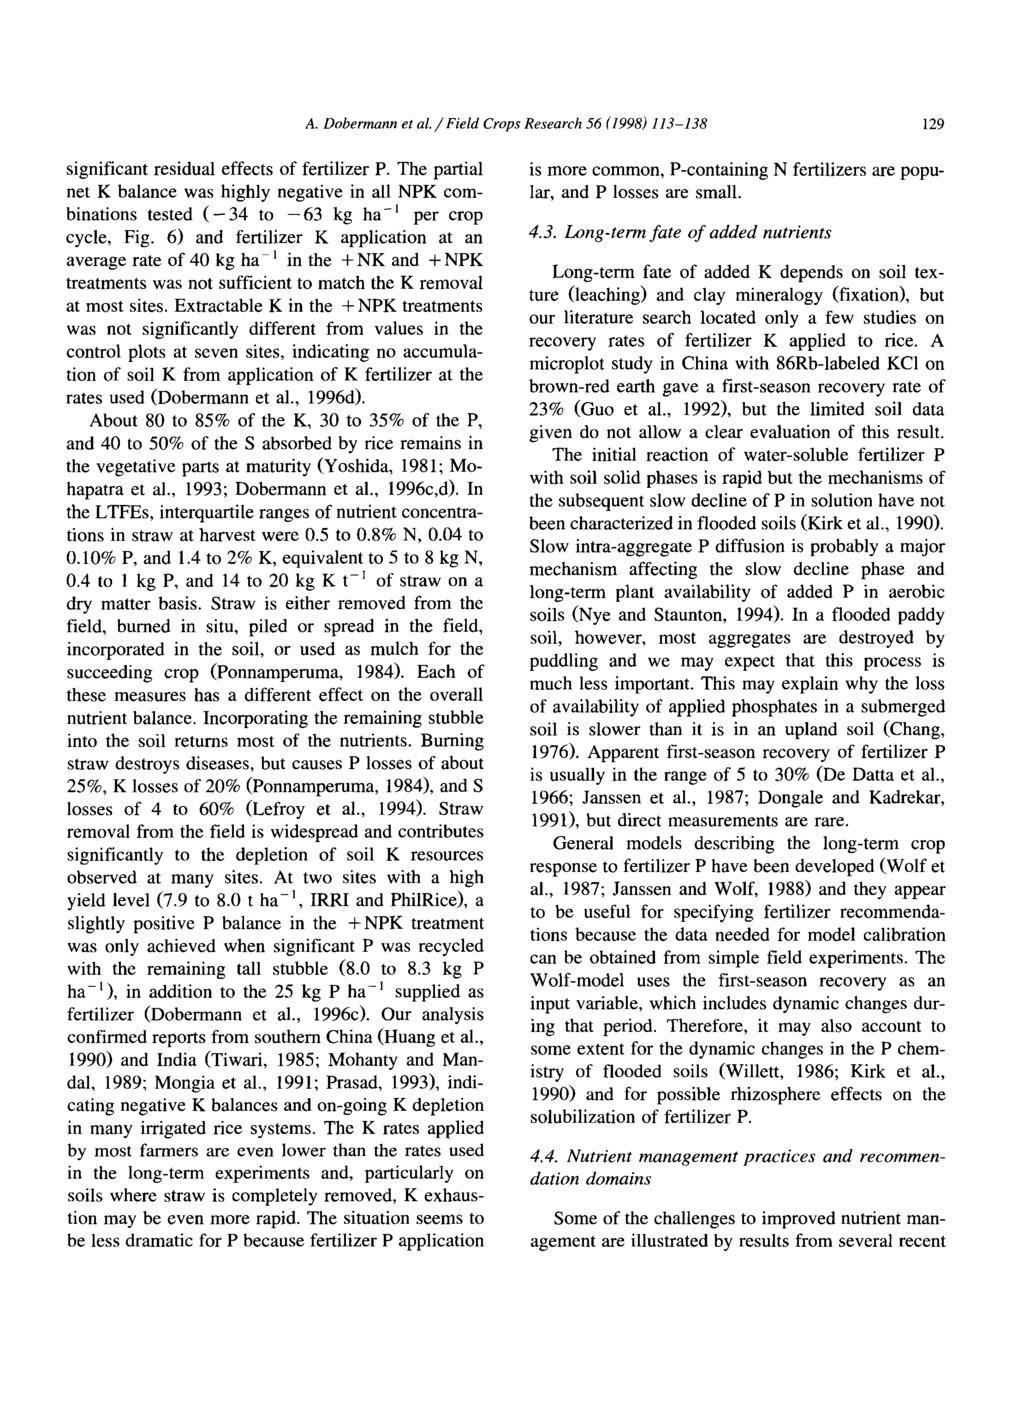 A. Dobermann et al. / Field Crops Research 56 (1998) 113-138 129 significant residual effects of fertilizer P.